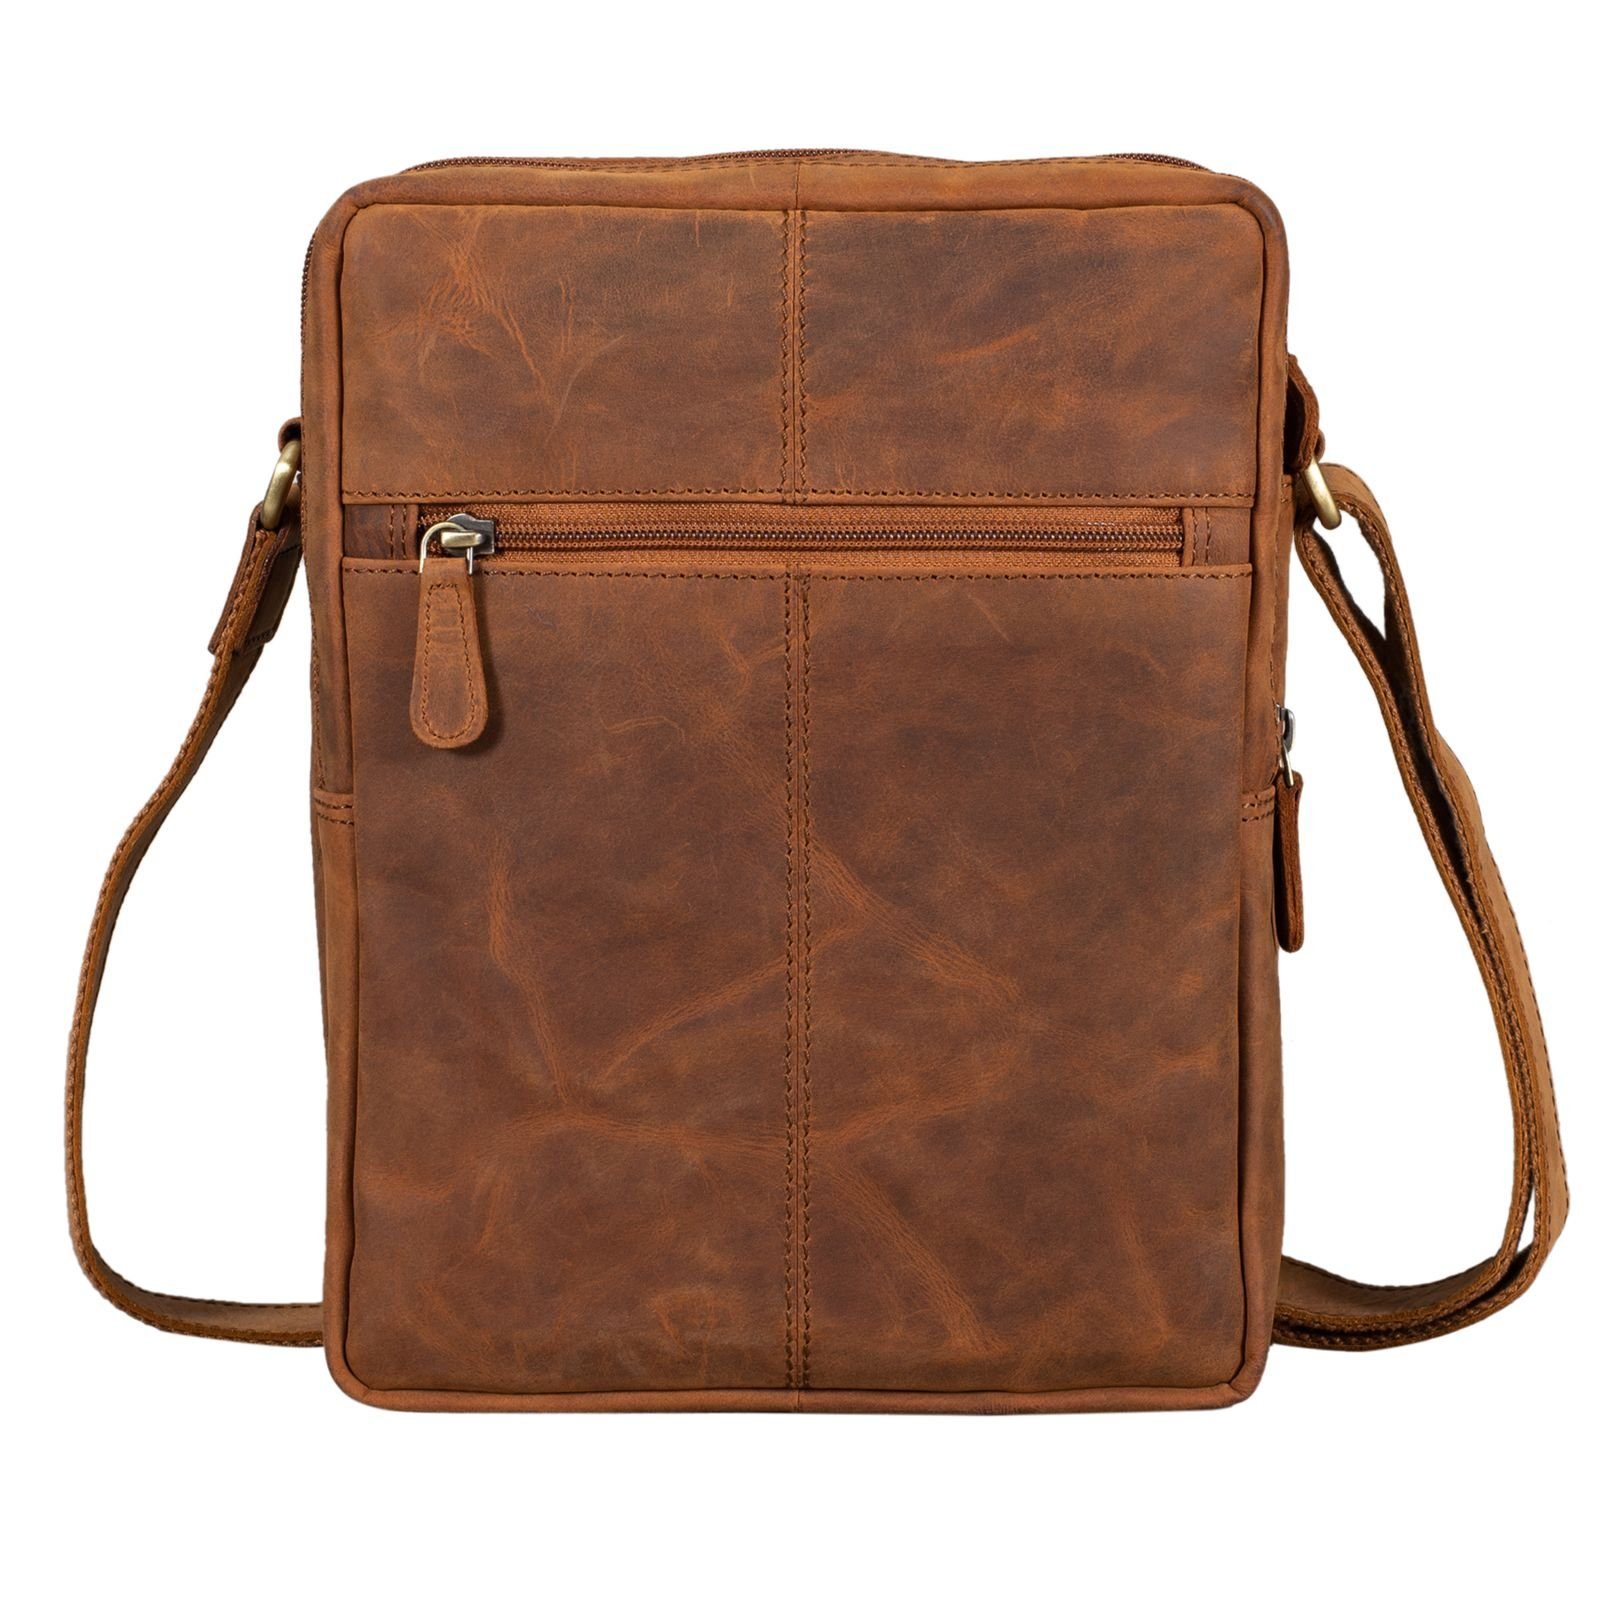 Klein Vintage Bag Leder Tasche dunkelbraun tan - "Irving" STILORD Messenger